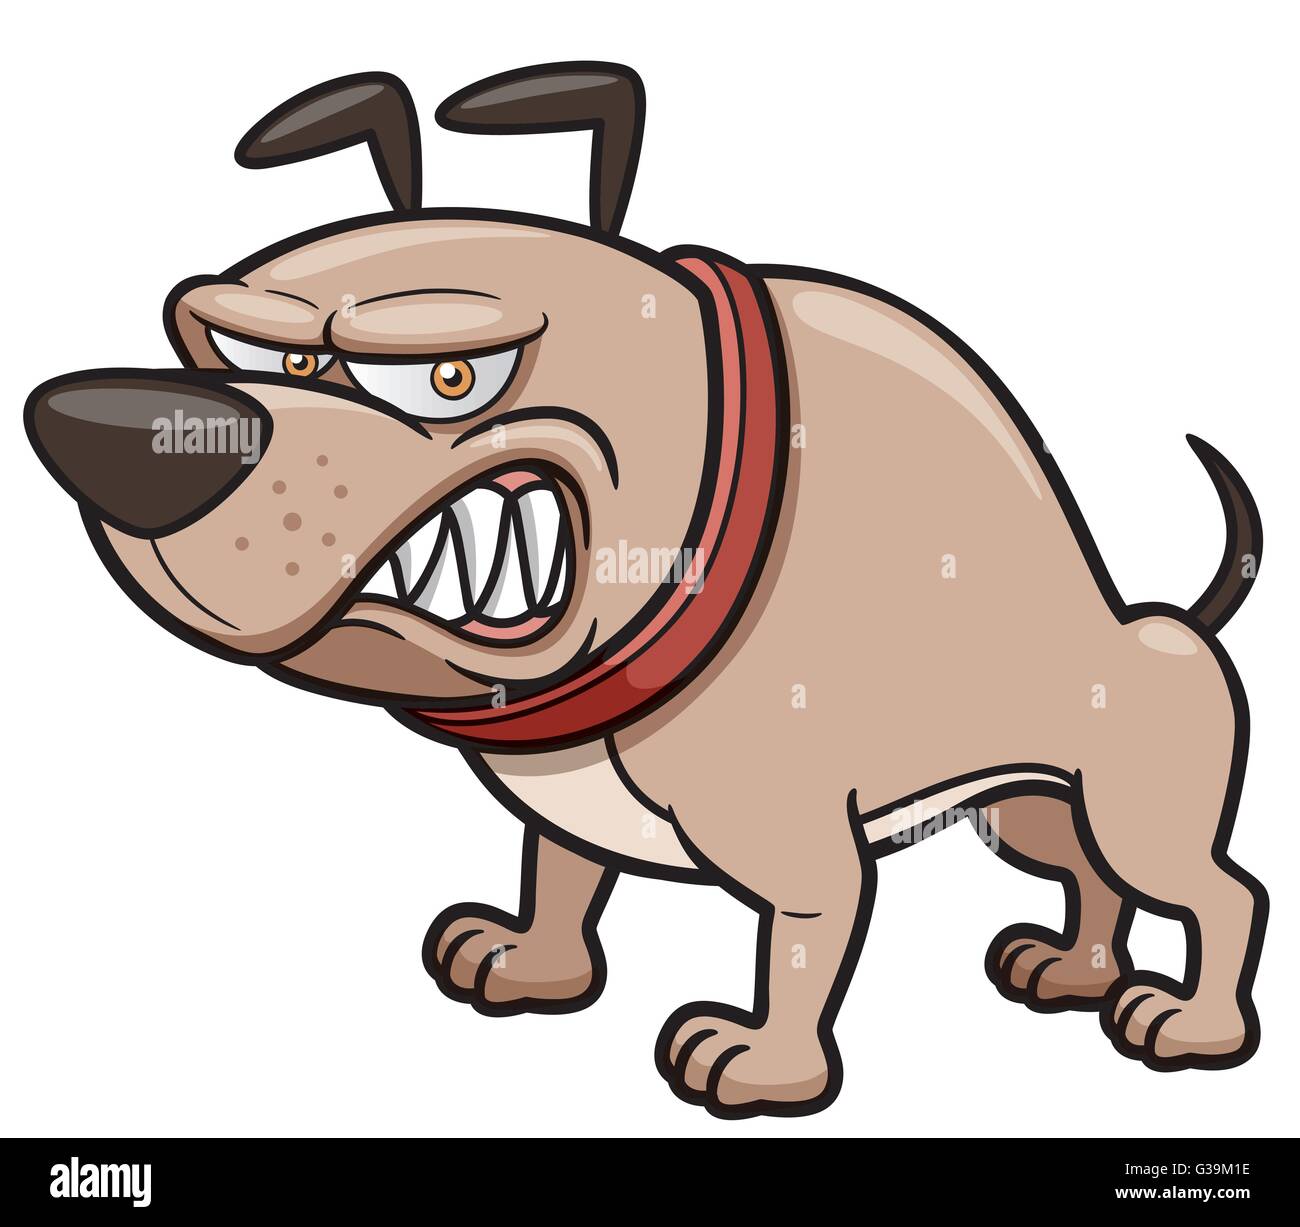 Vektor-Illustration der wütende Hund Cartoon Stock-Vektorgrafik - Alamy